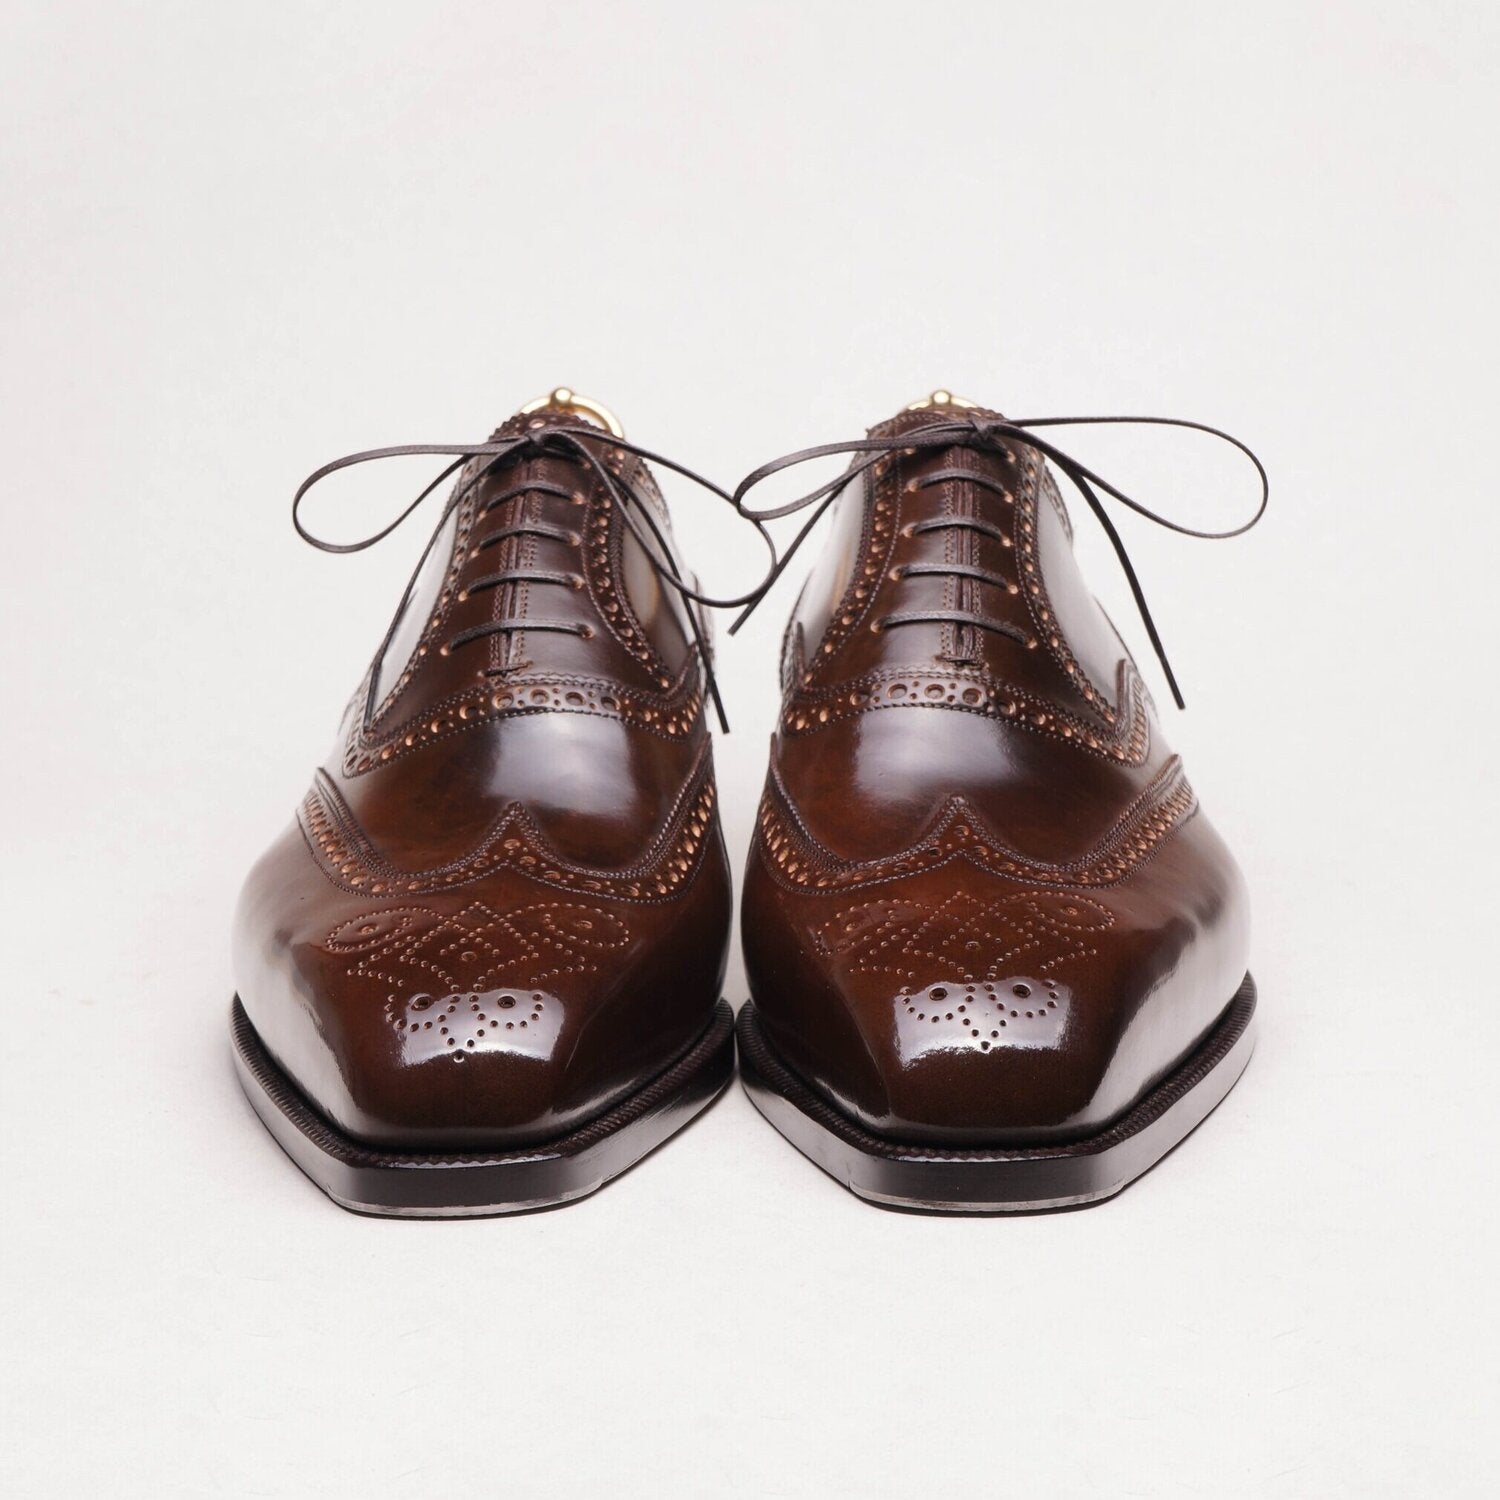 Stefano Bemer Bespoke Oxford Shoes - 3